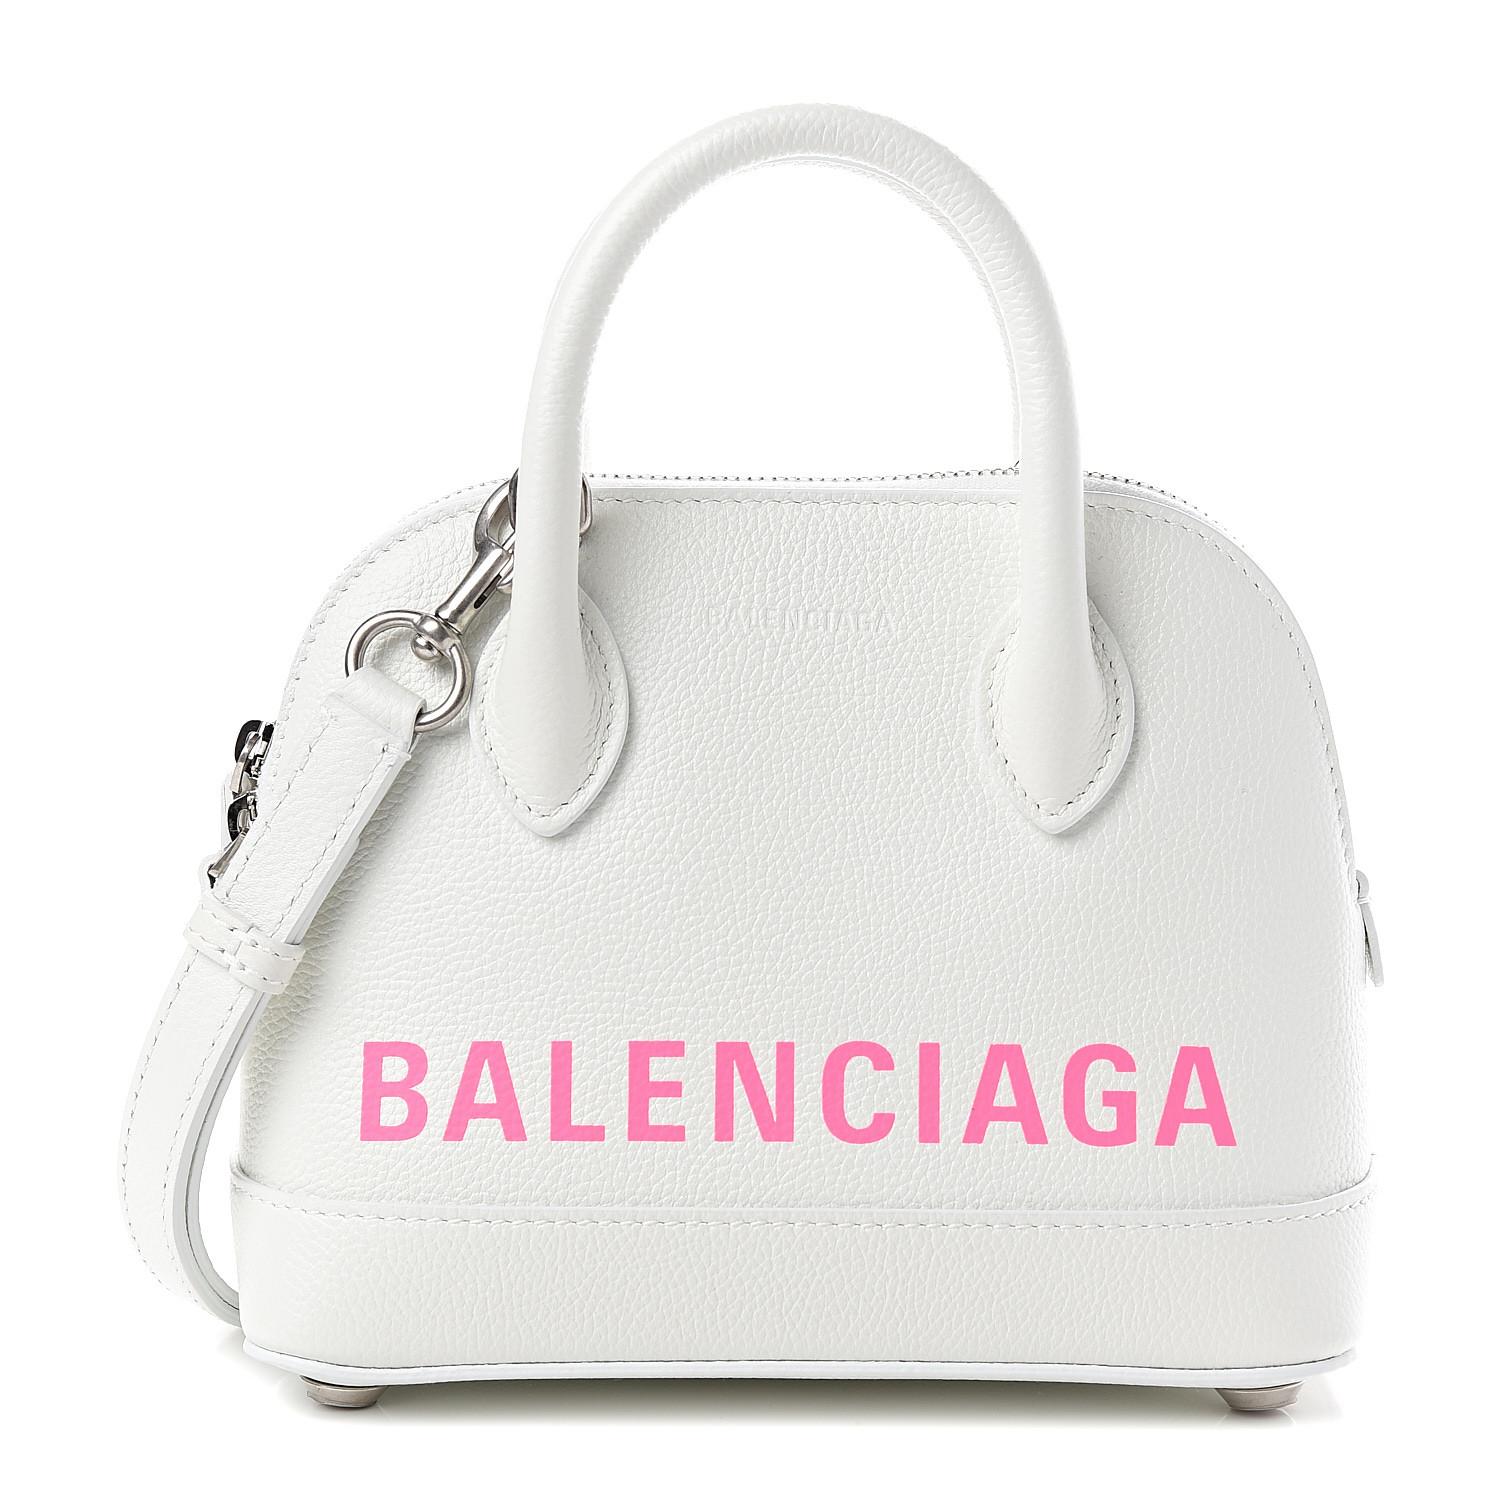 pink and white balenciaga bag